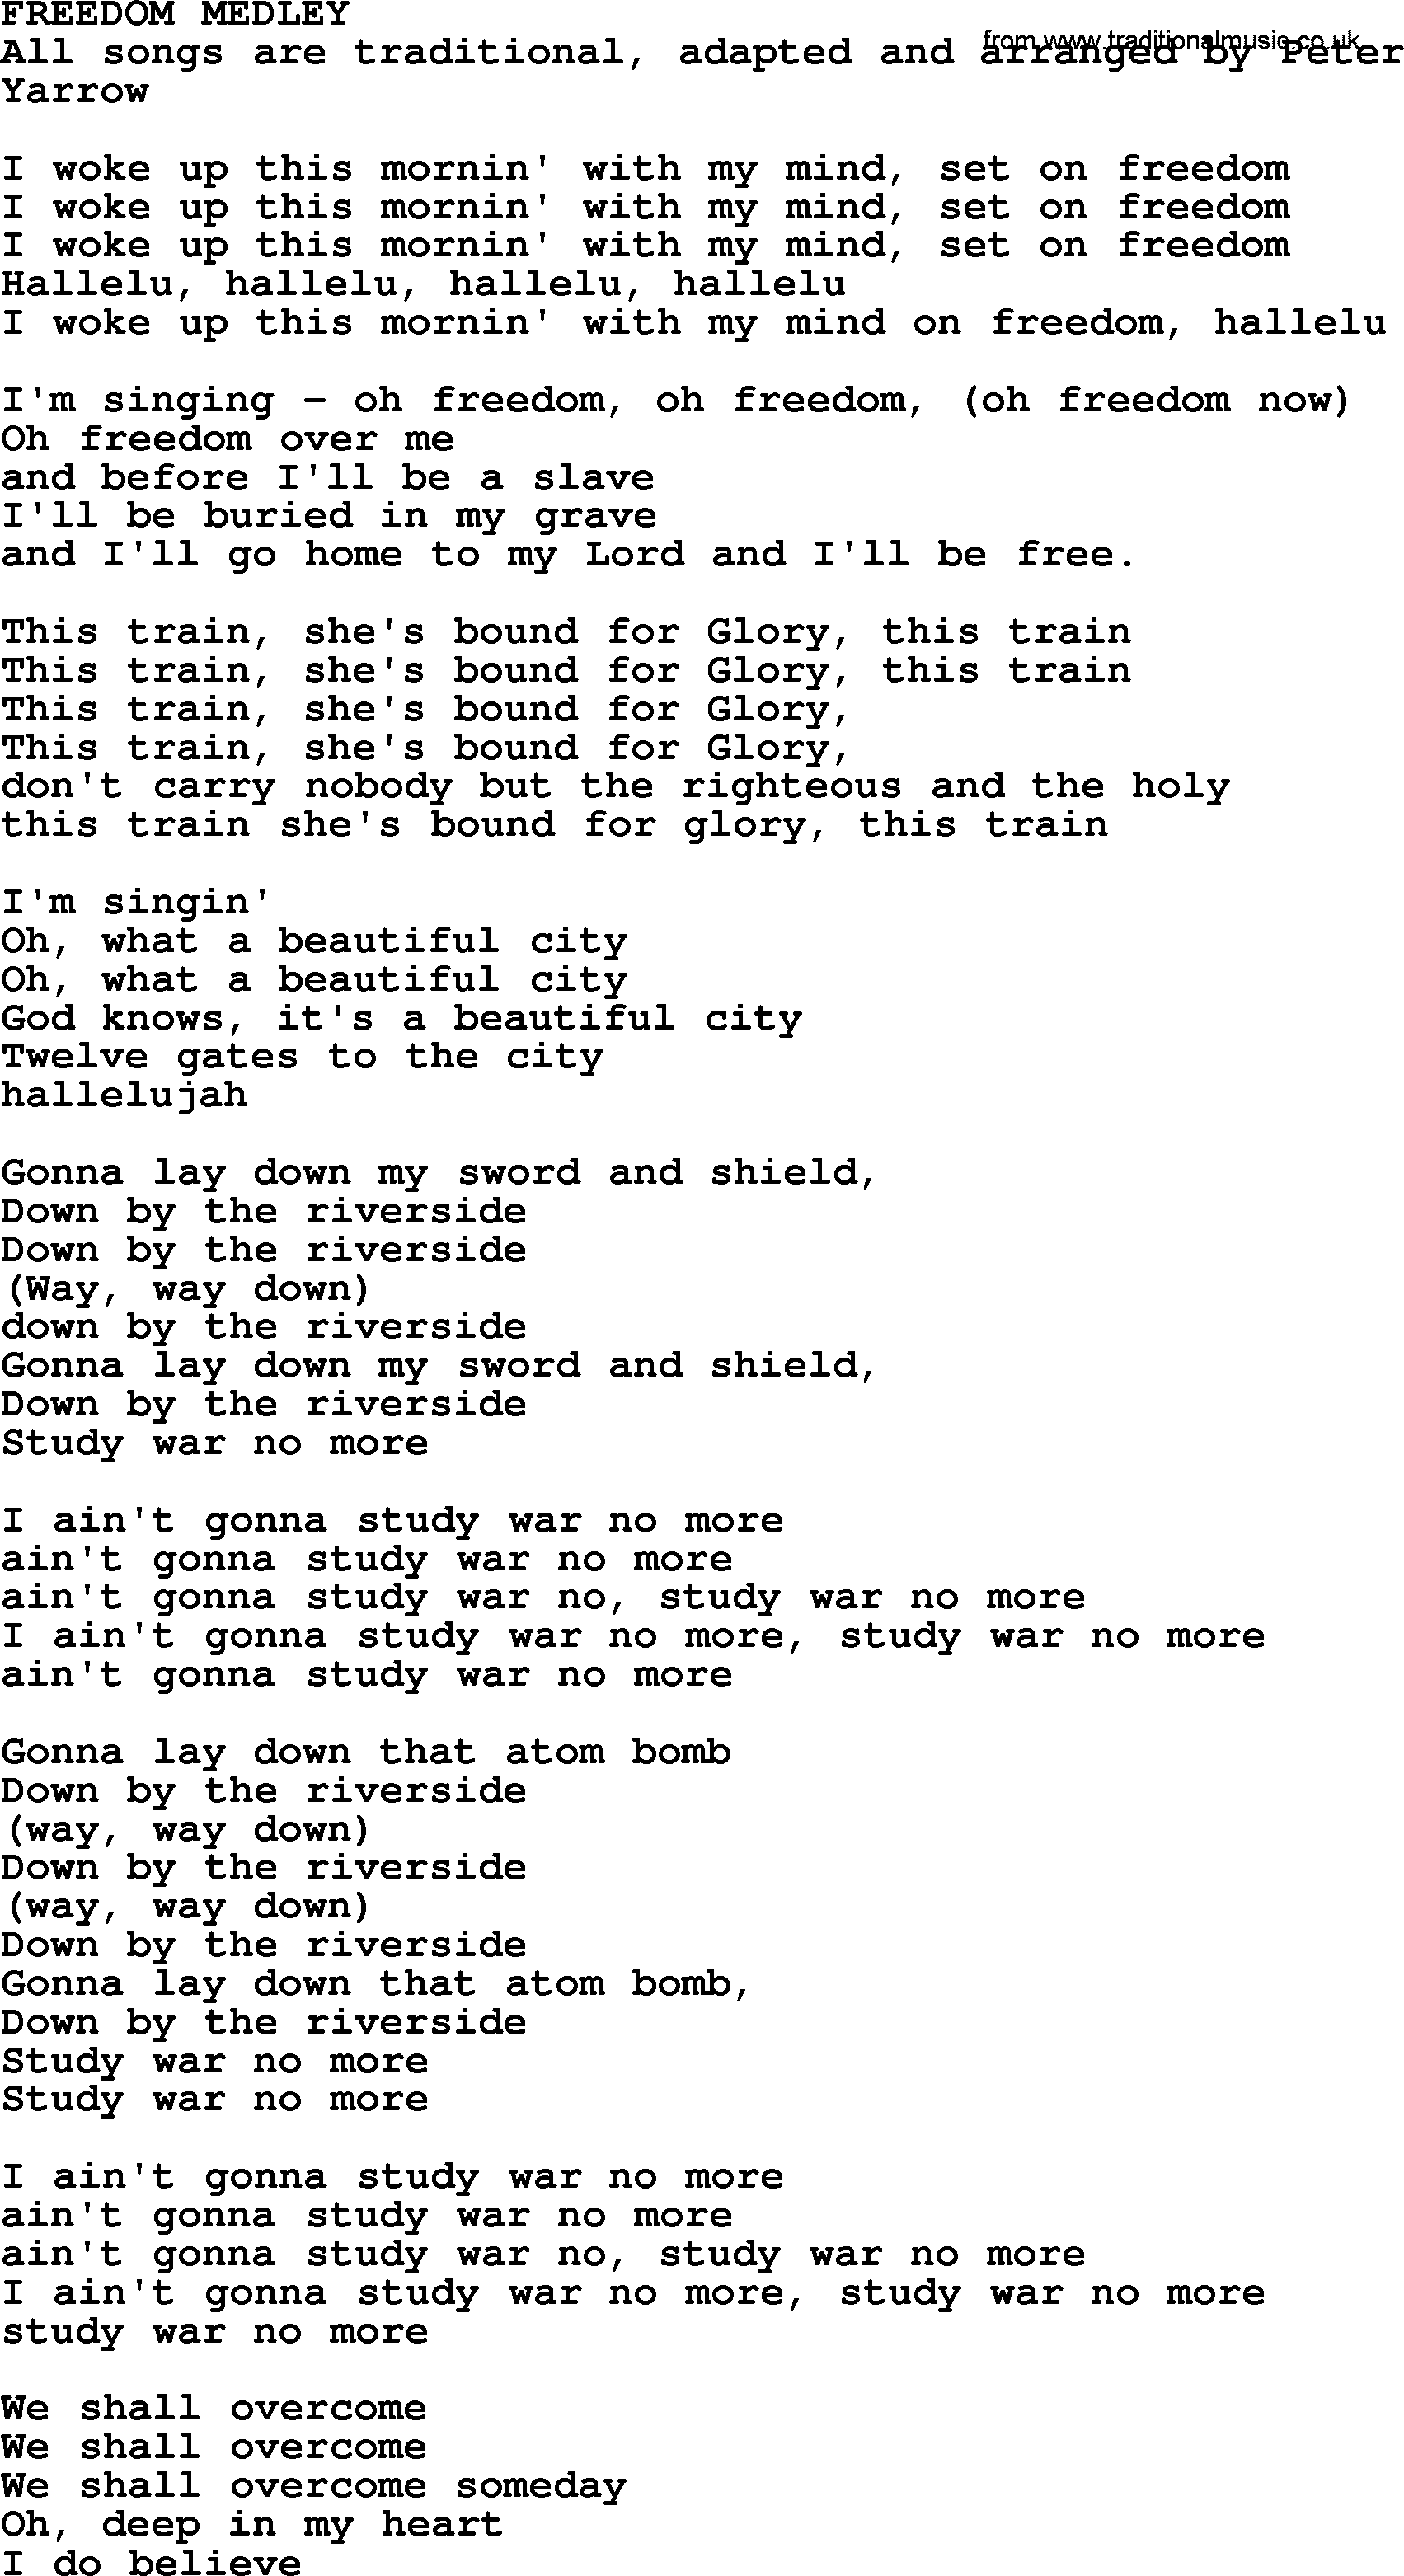 Peter, Paul and Mary song Freedom Medley lyrics